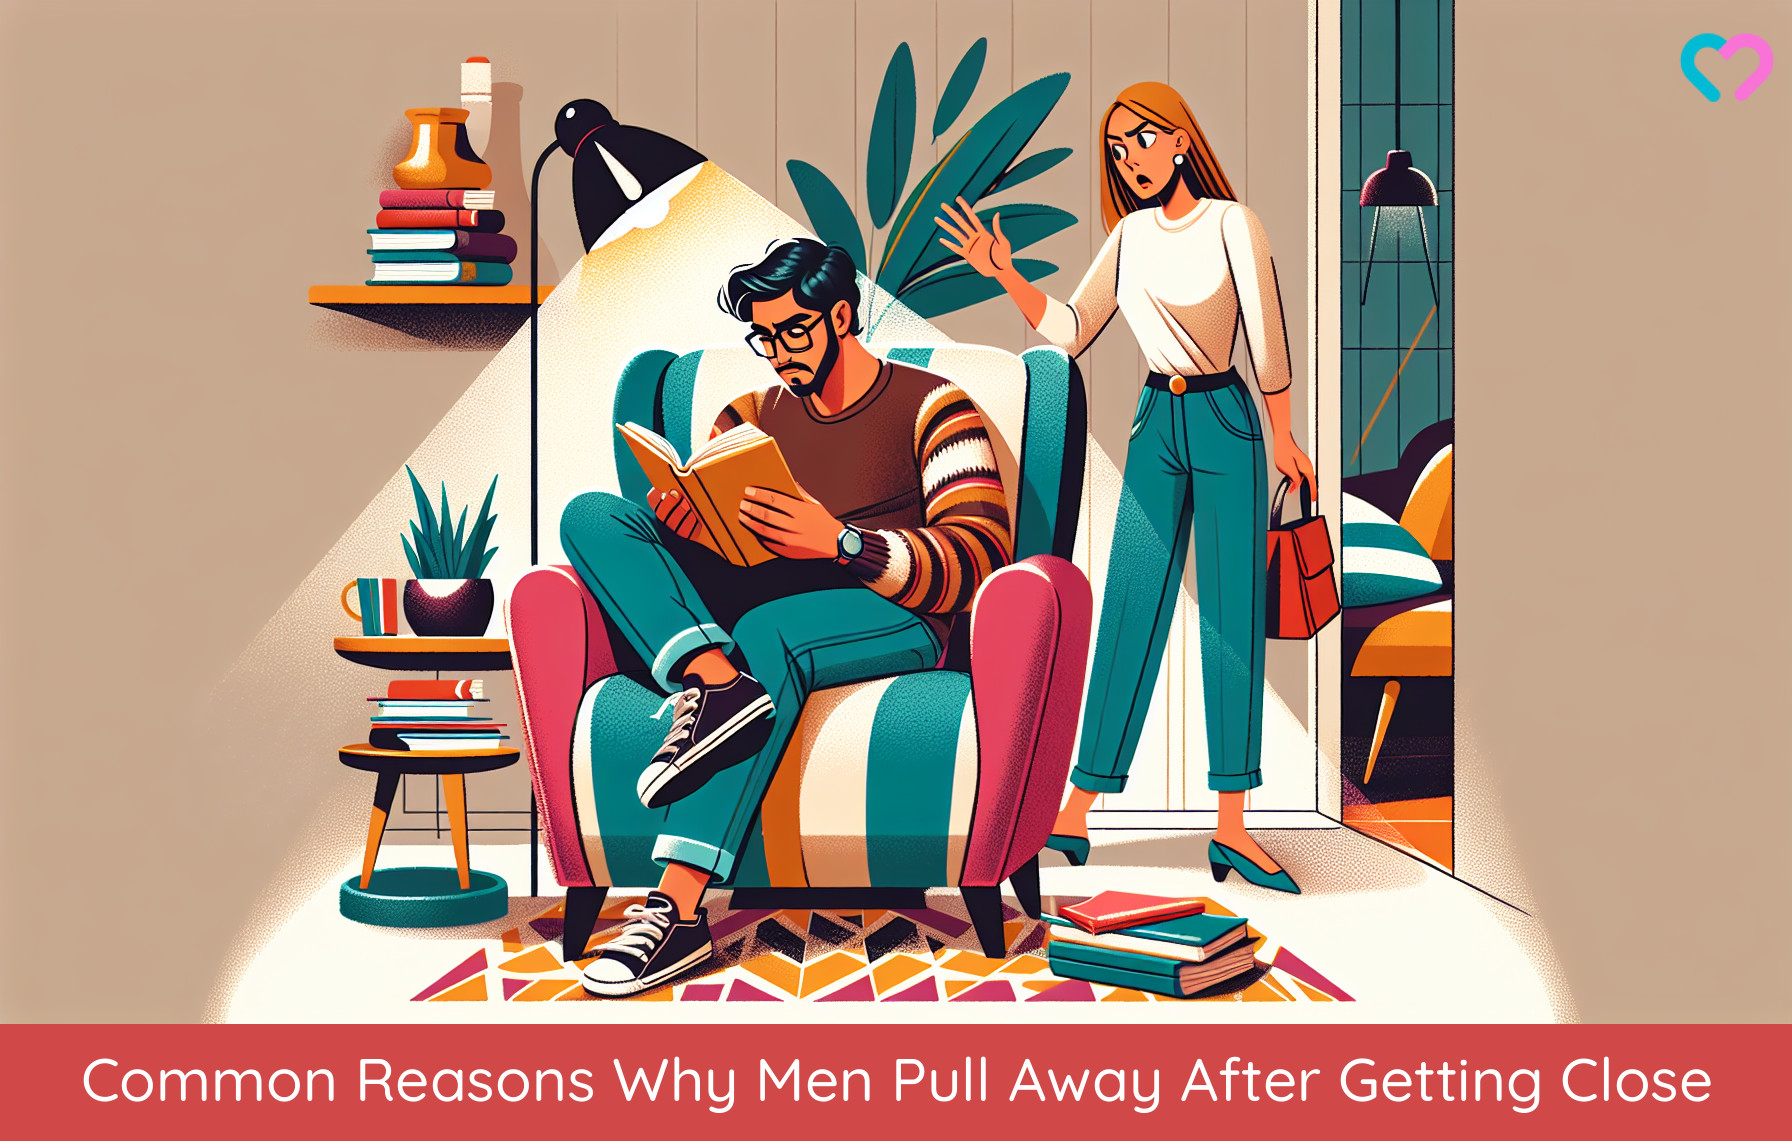 Why men pull away_illustration